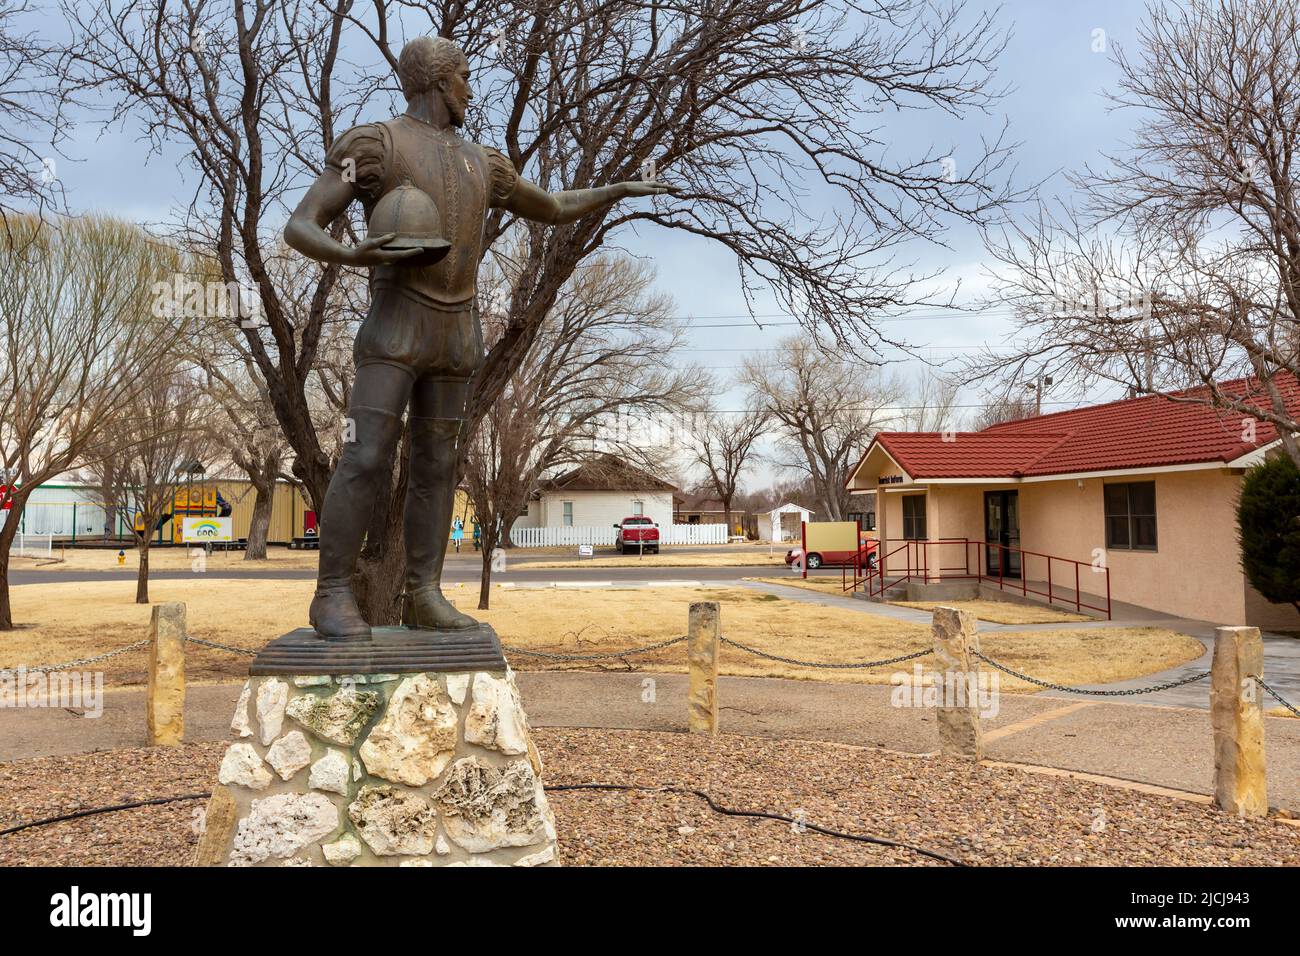 Liberal, Kansas - Eine Statue von Don Francisco Vasquez de Coronado vor dem Liberal Visitors Center und dem Coronado Museum. Coronado erforschte die are Stockfoto